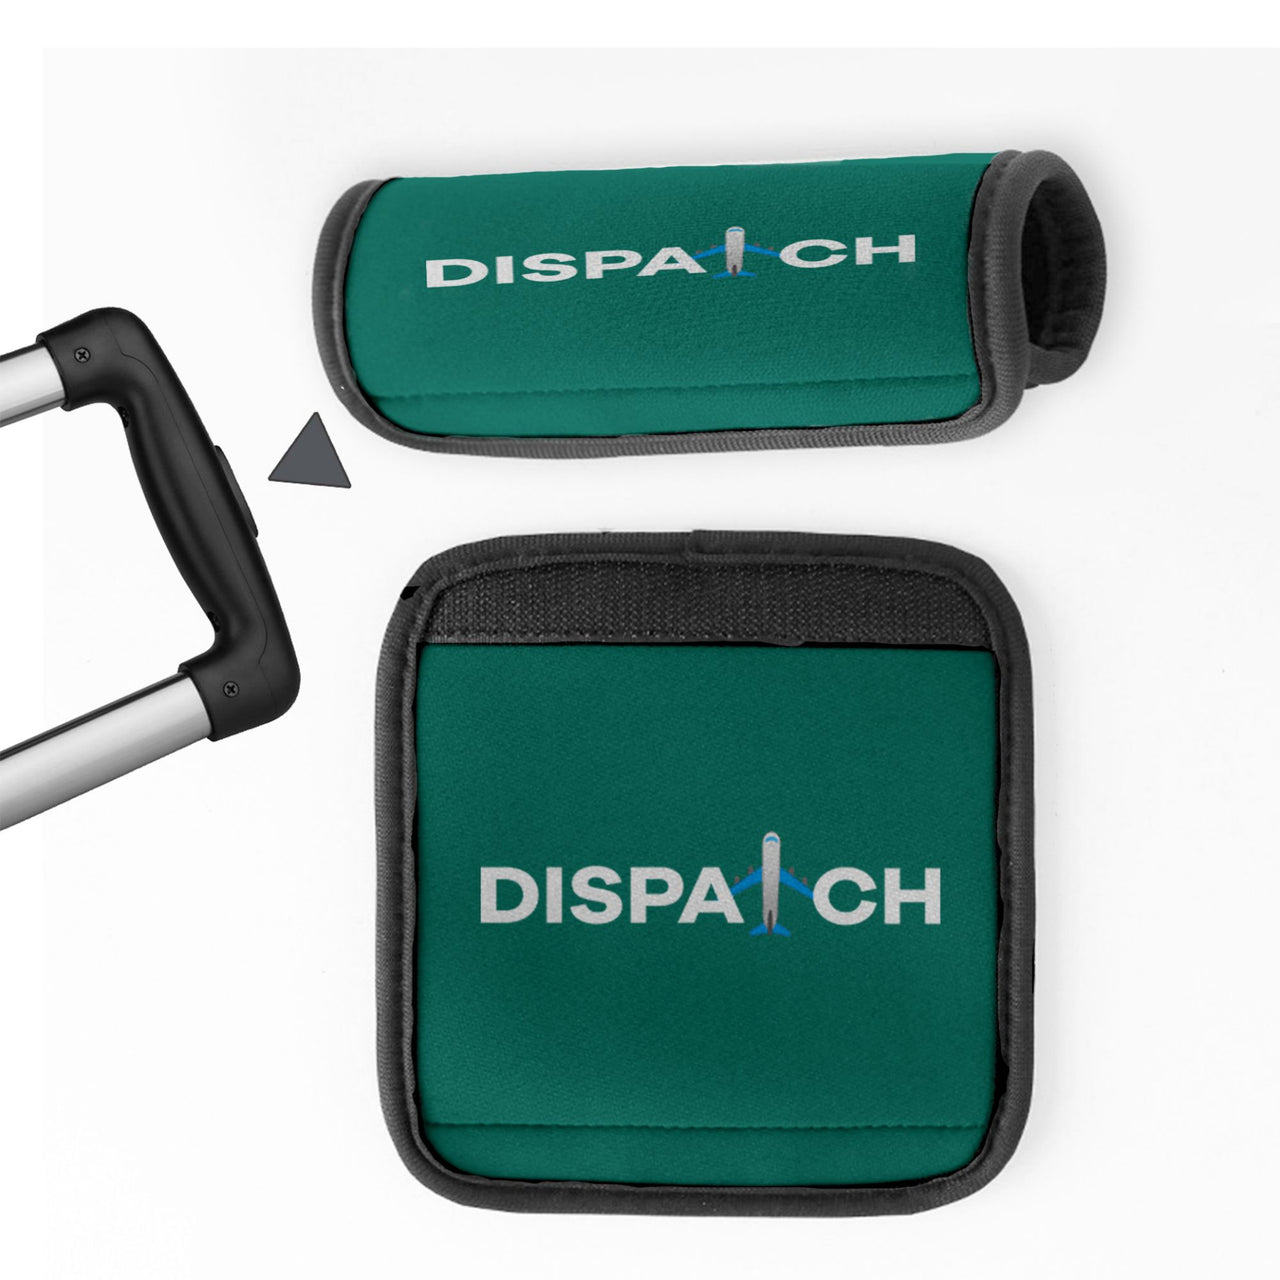 Dispatch Designed Neoprene Luggage Handle Covers